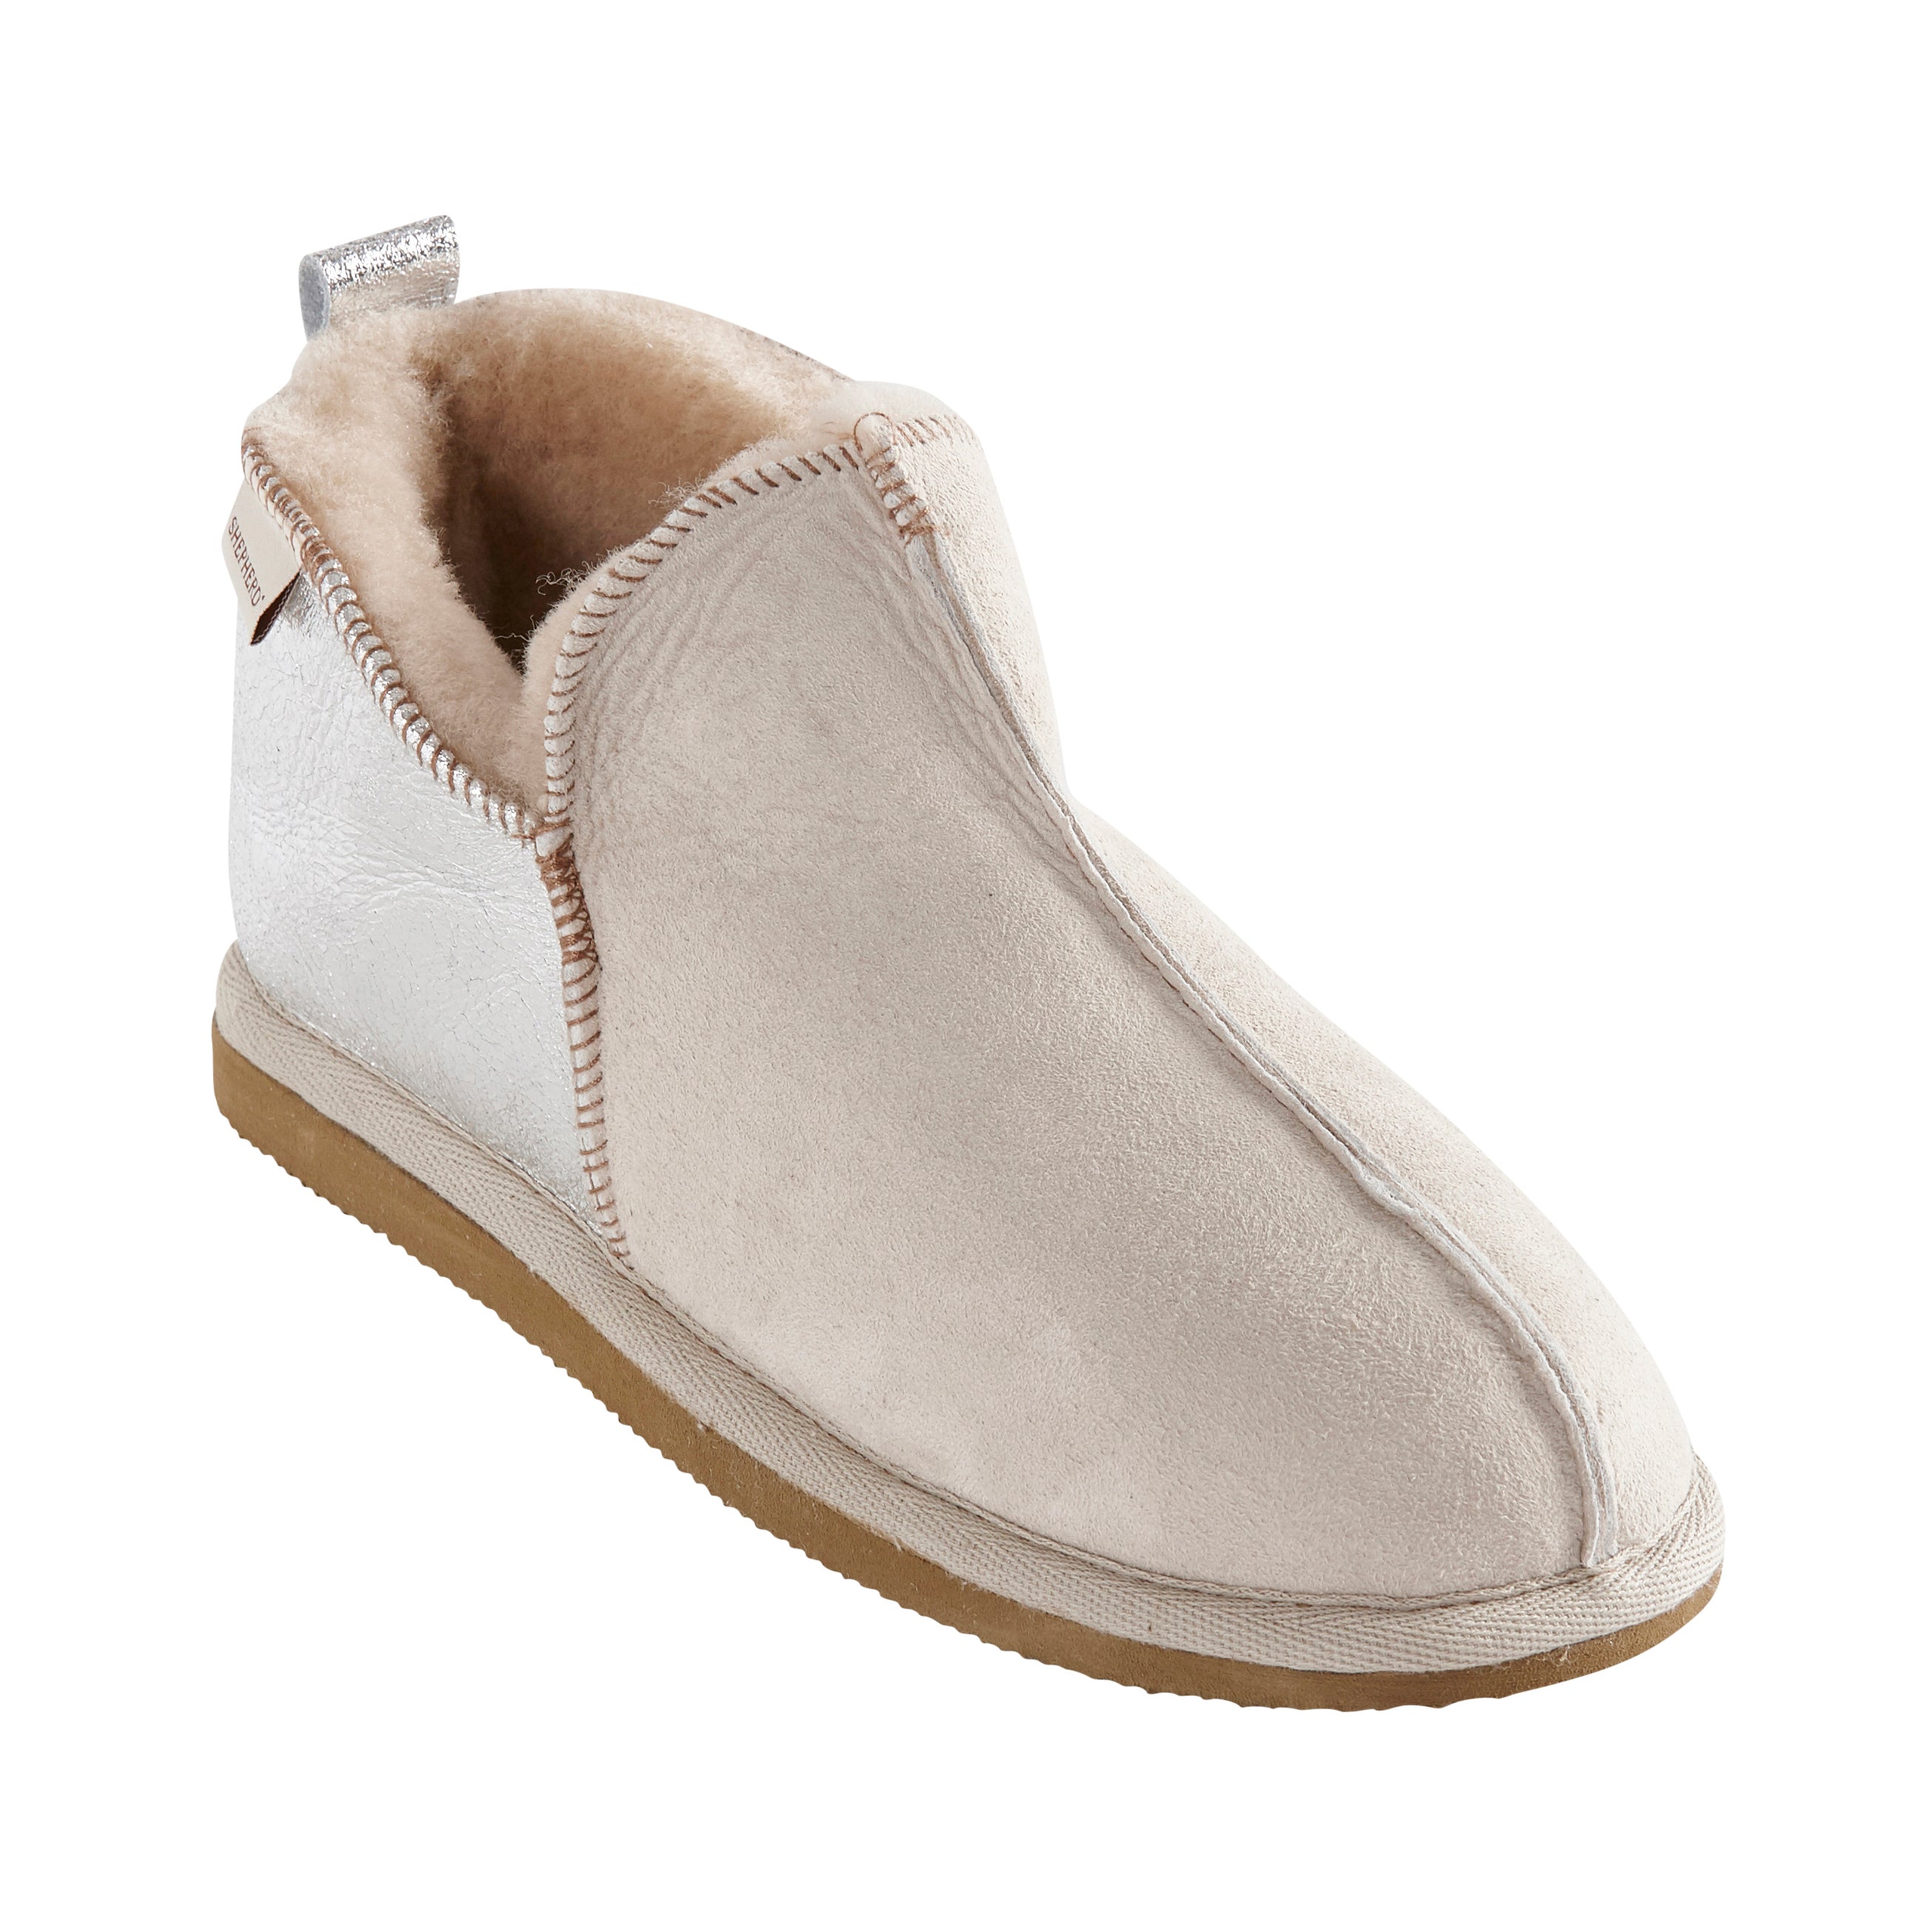 Ladies Genuine Sheepskin Slipper Boots by Shepherd of Sweden